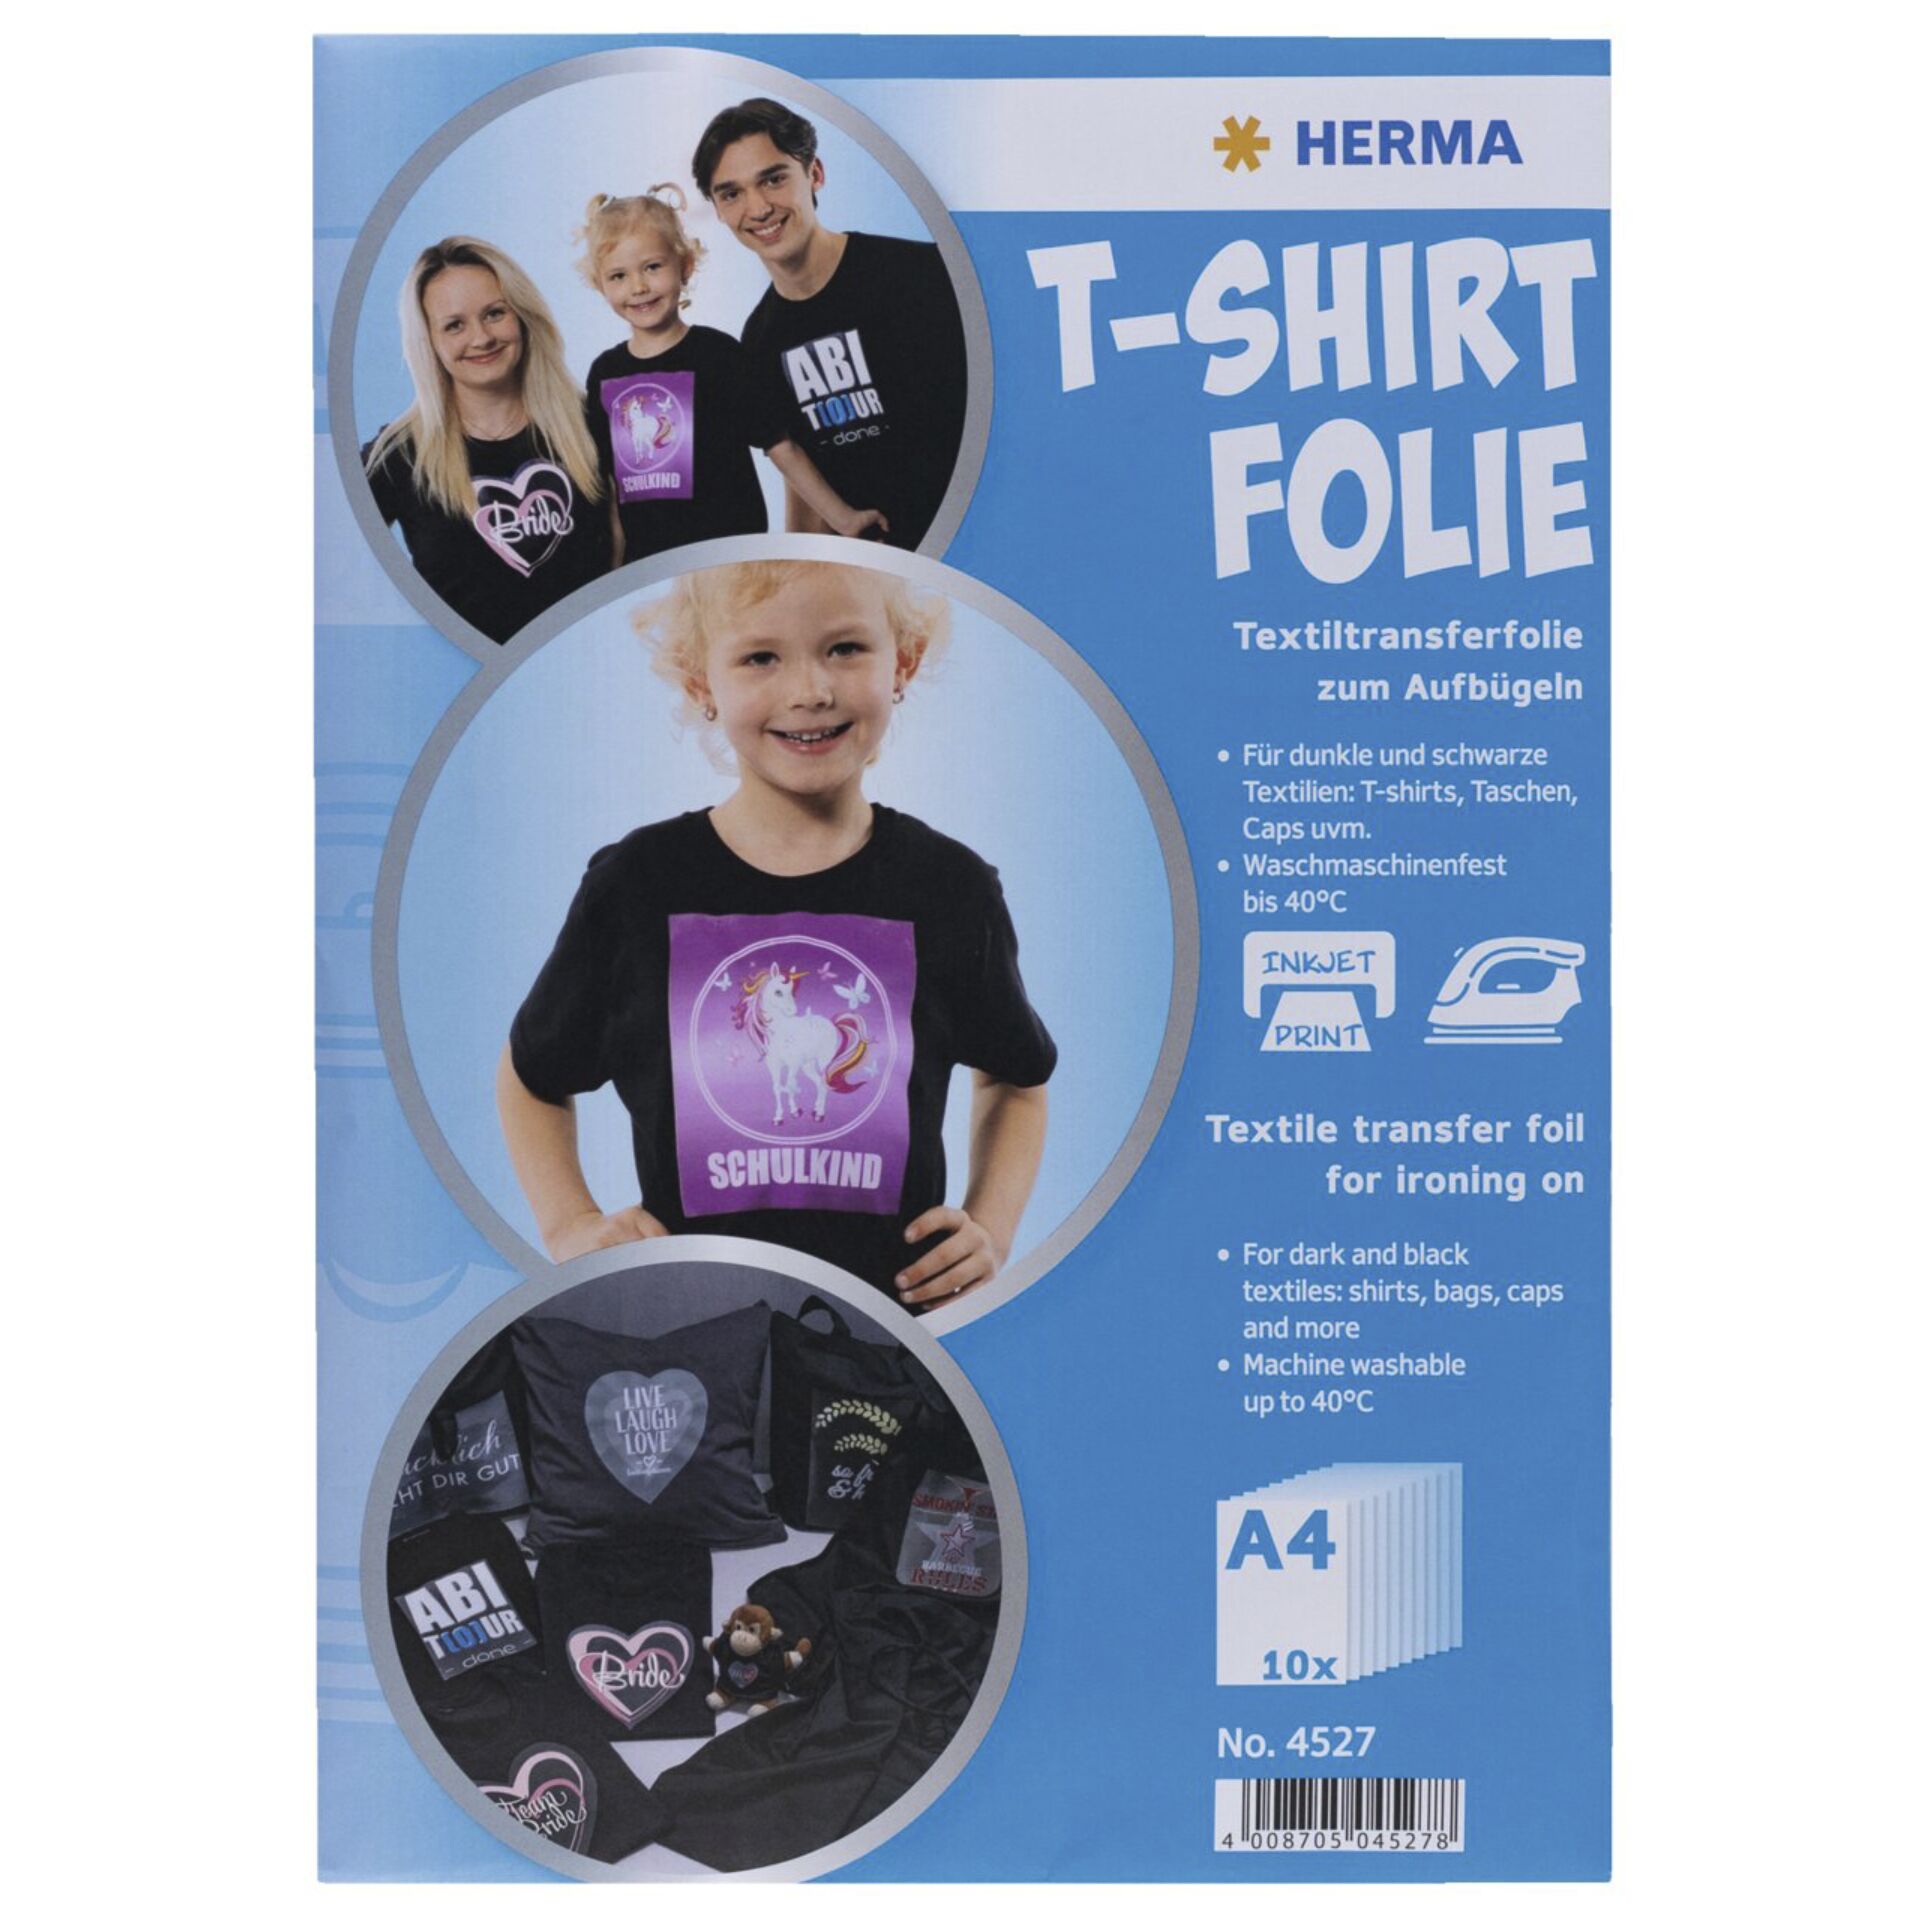 Herma T-Shirt Folie A4 f. dunkle + schwarze Textilien 20 Bl. 4527